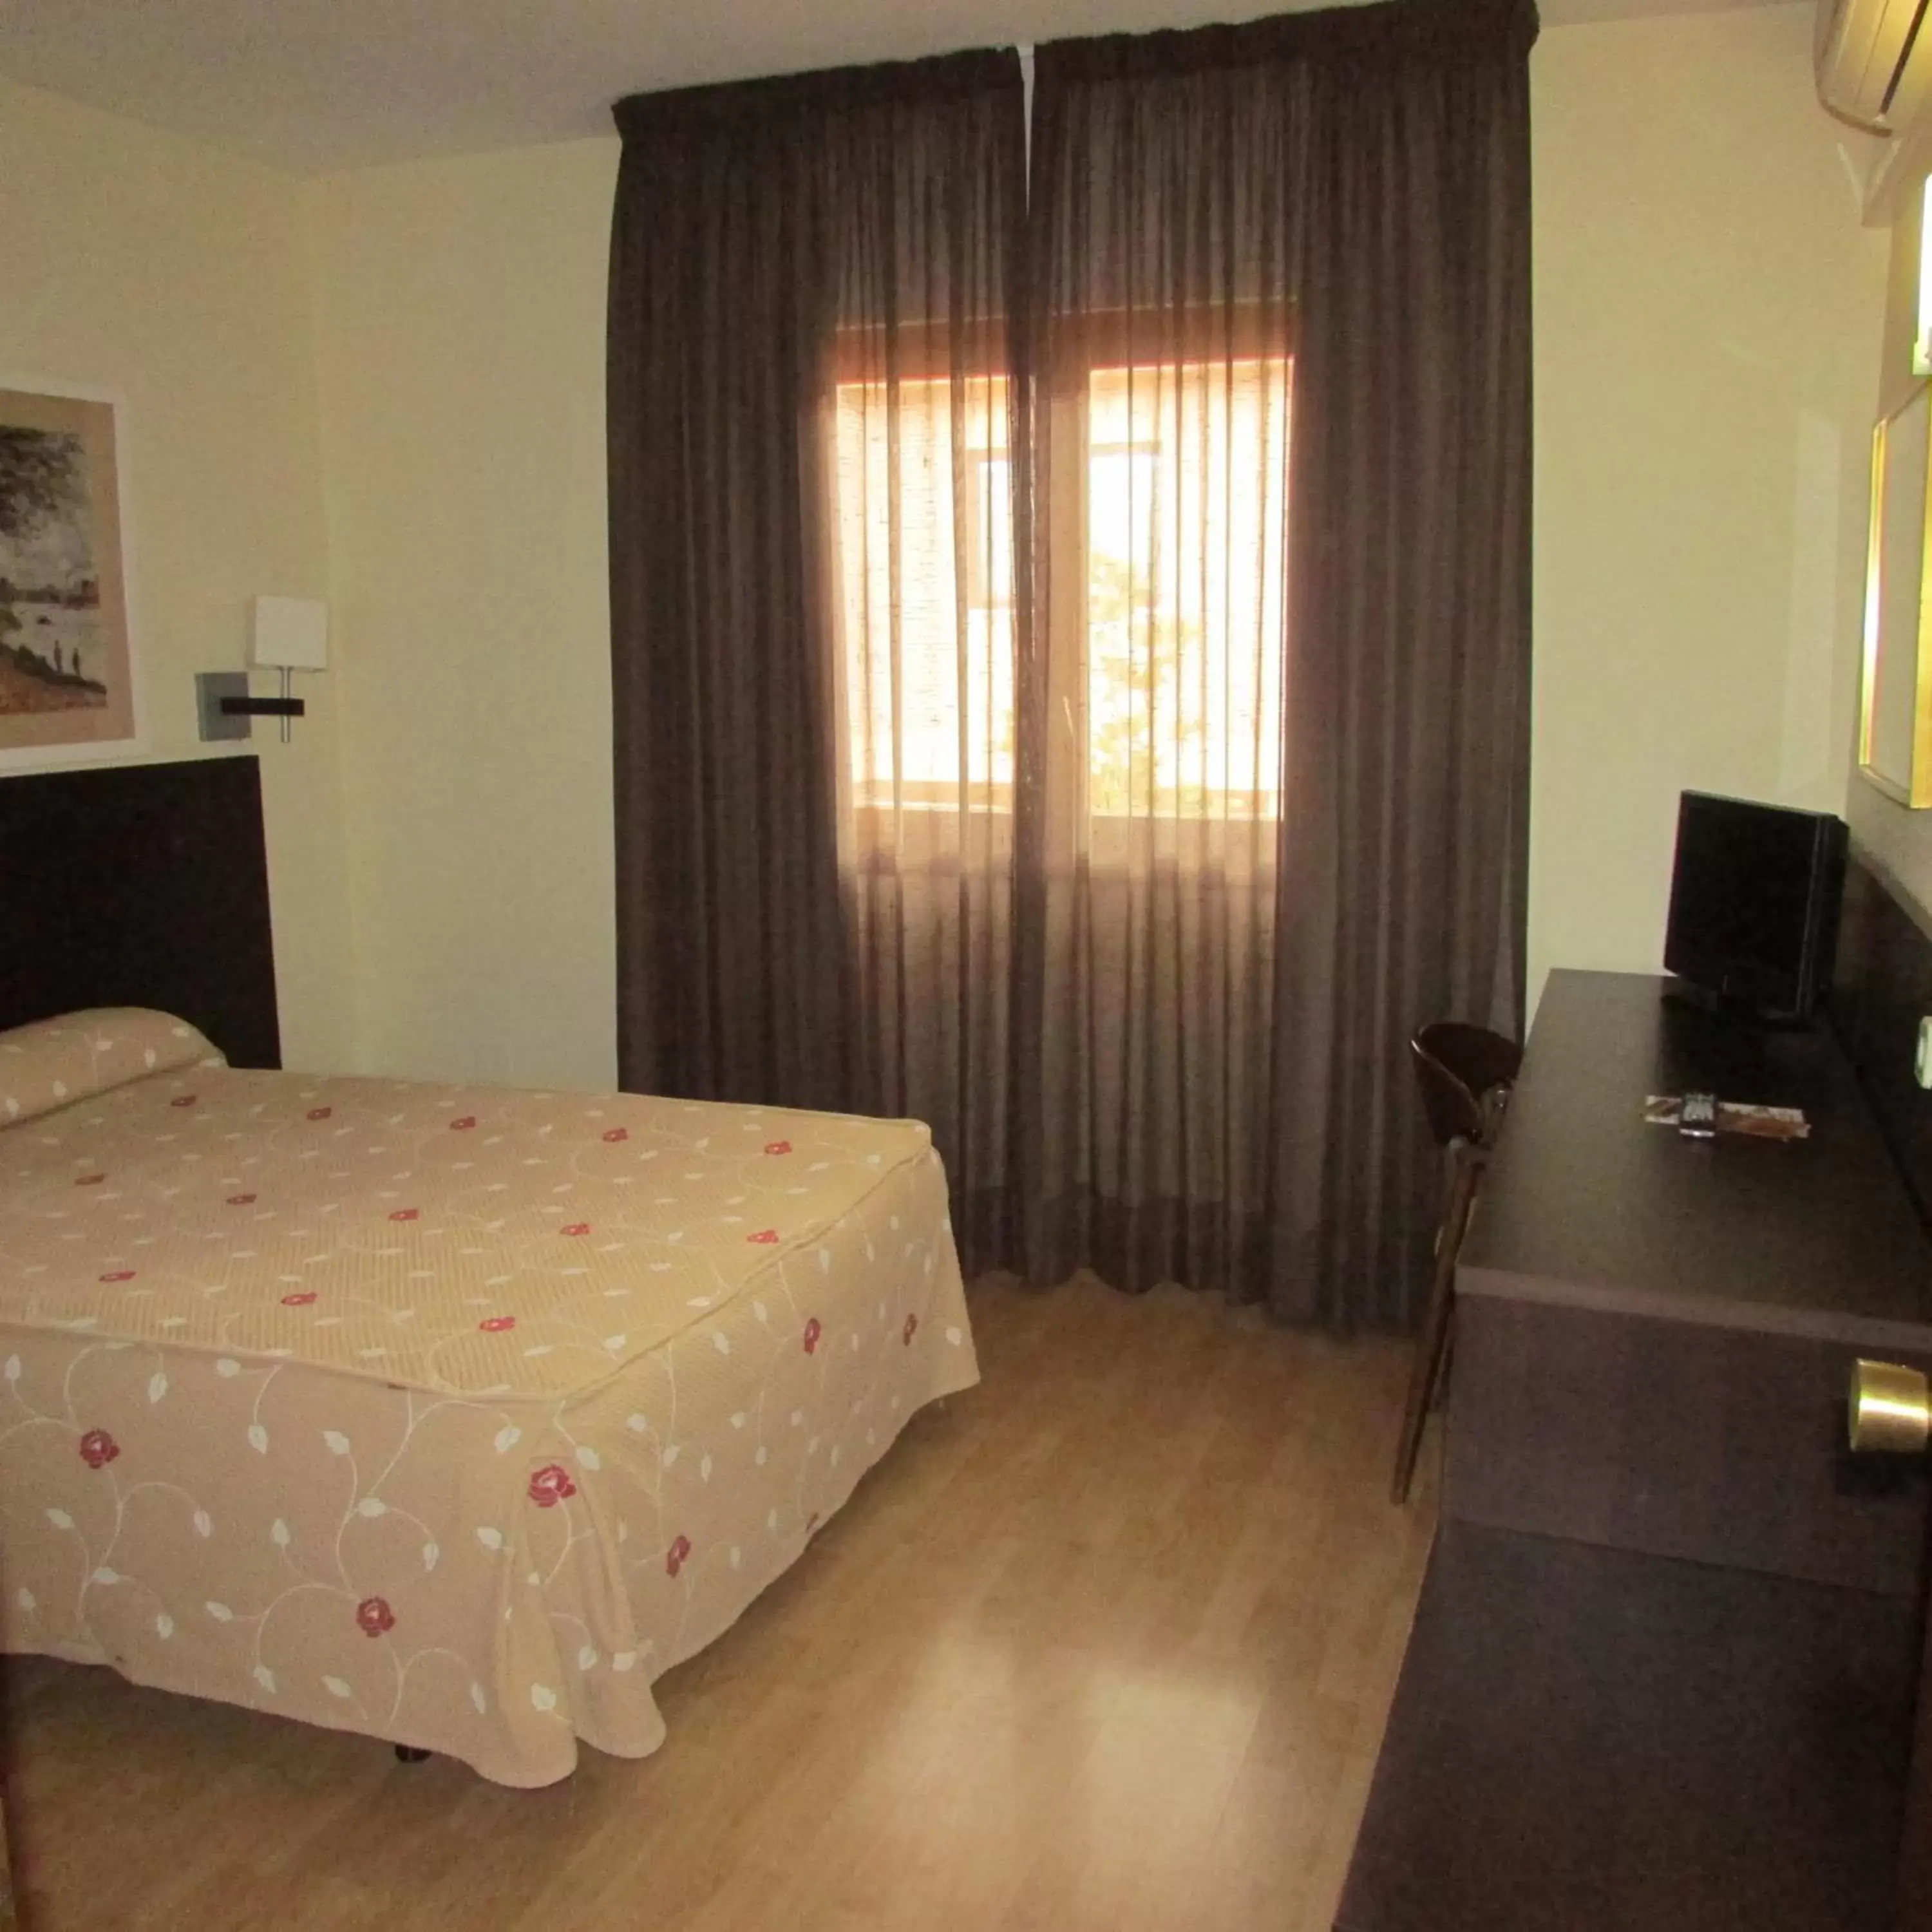 Bed in Hotel Tudanca-Aranda II